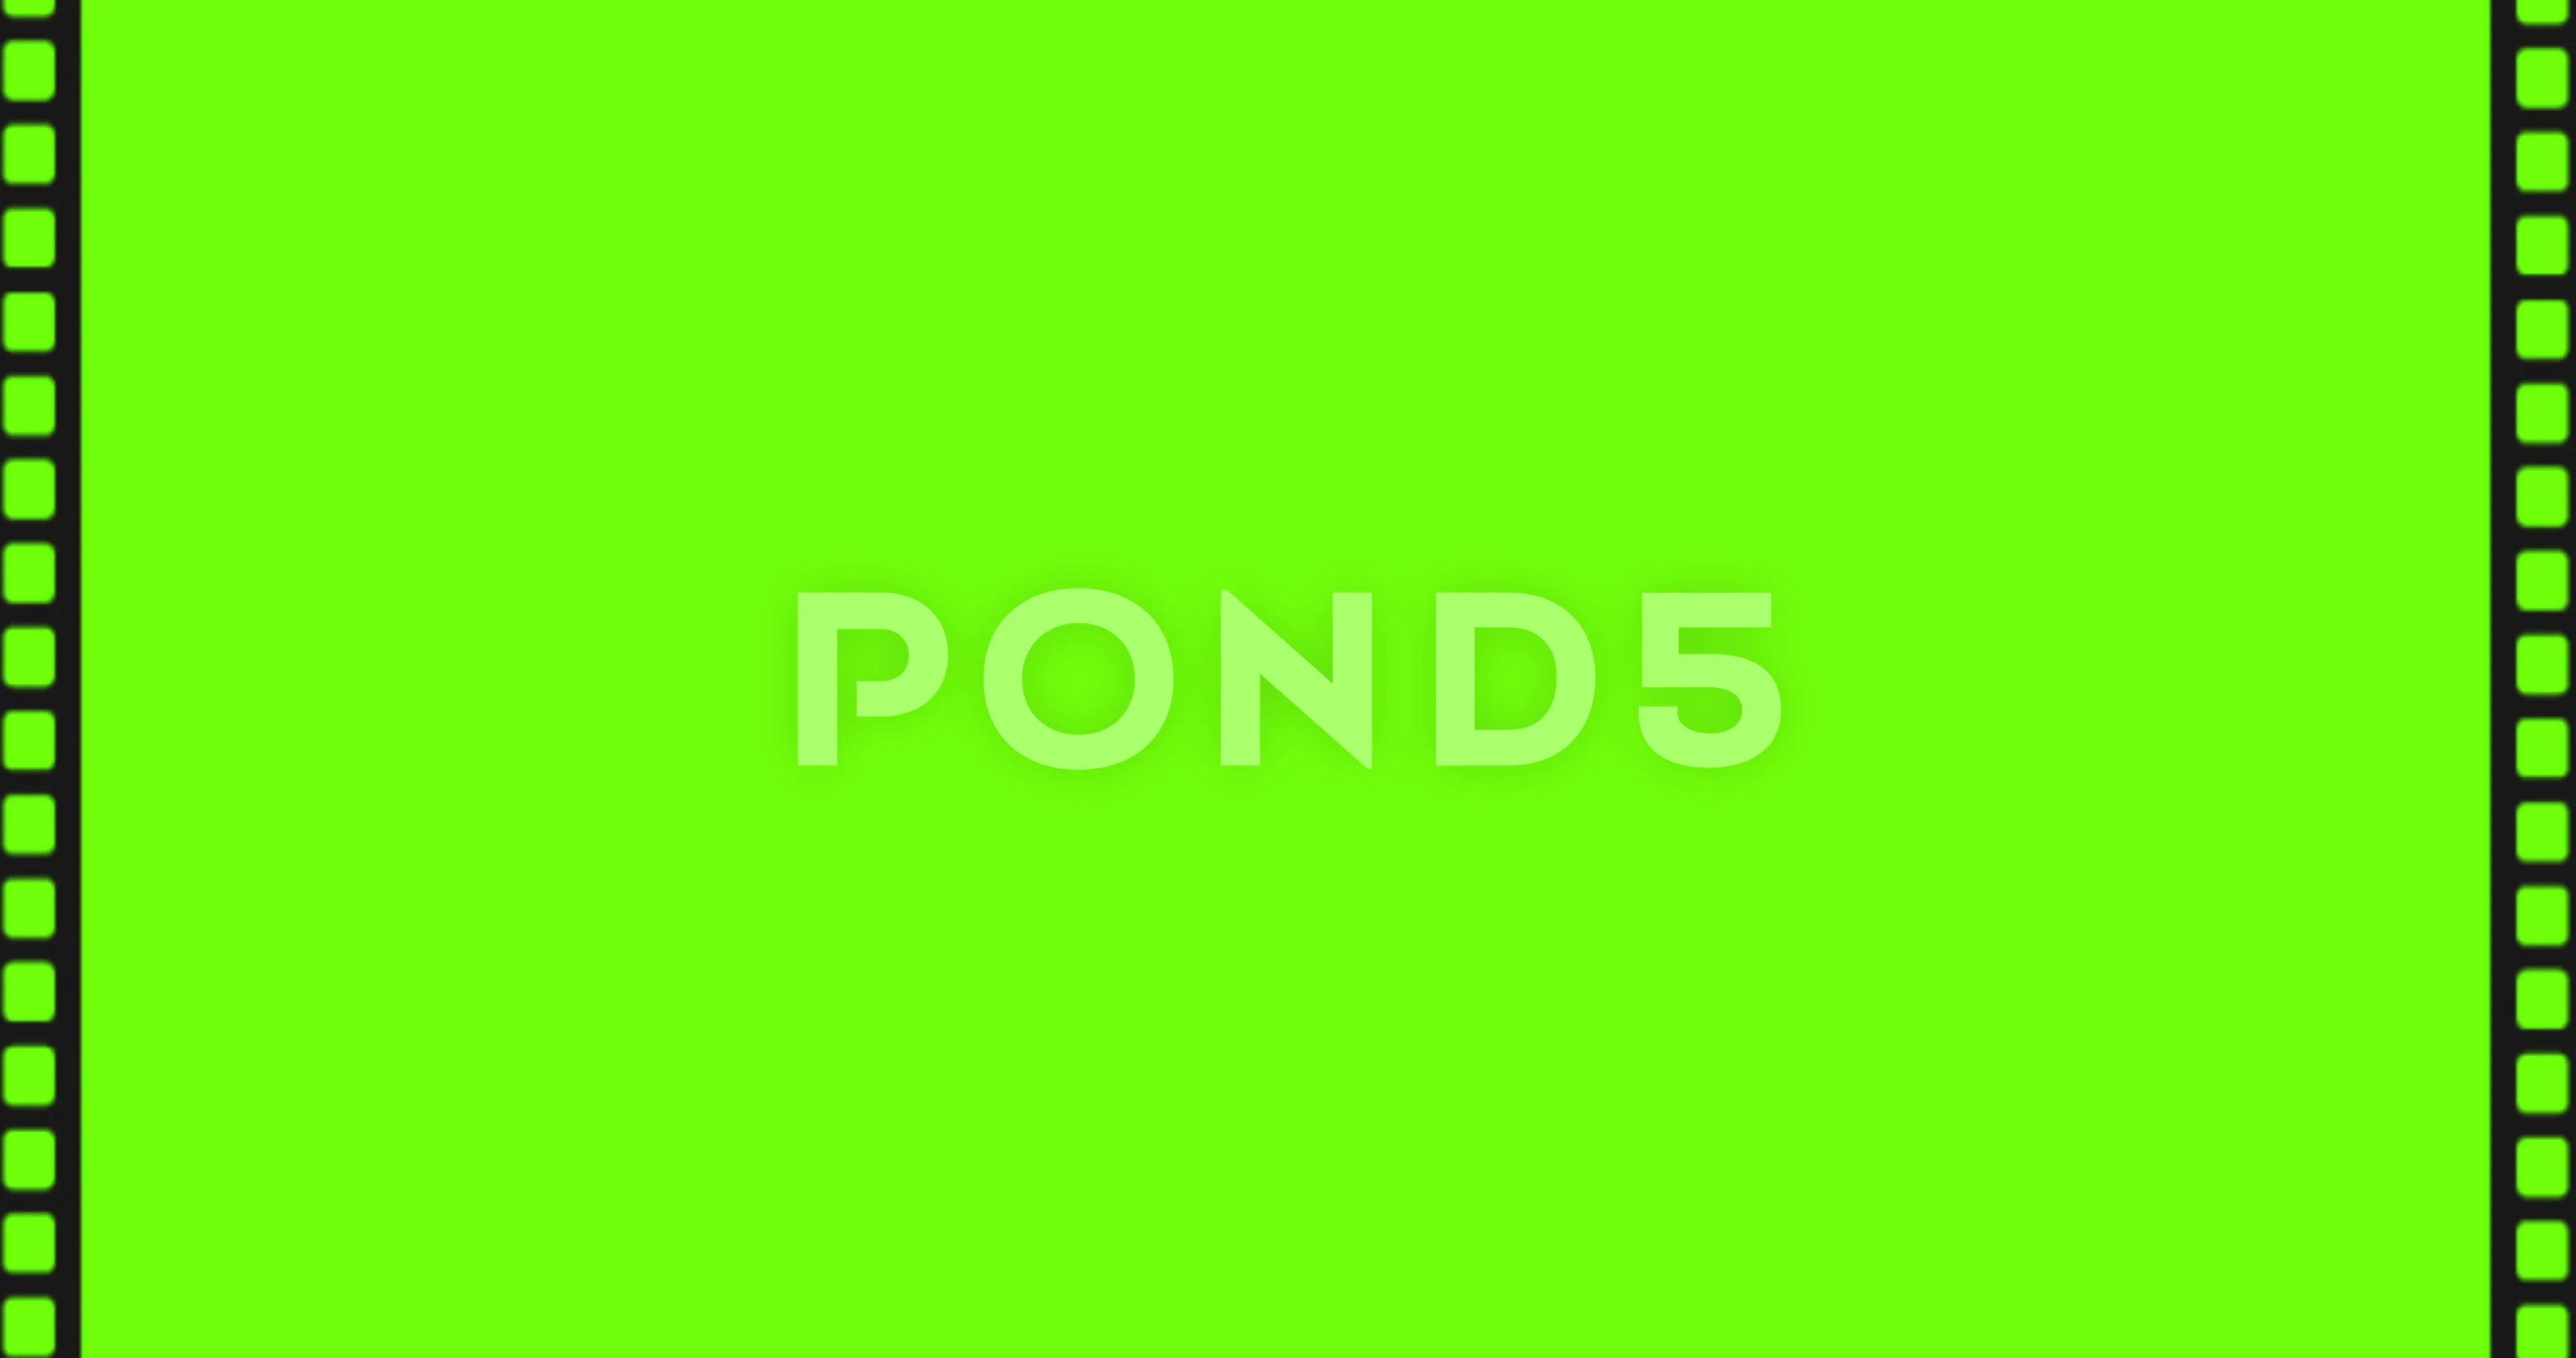 https://images.pond5.com/film-reel-effect-green-screen-footage-155740963_prevstill.jpeg